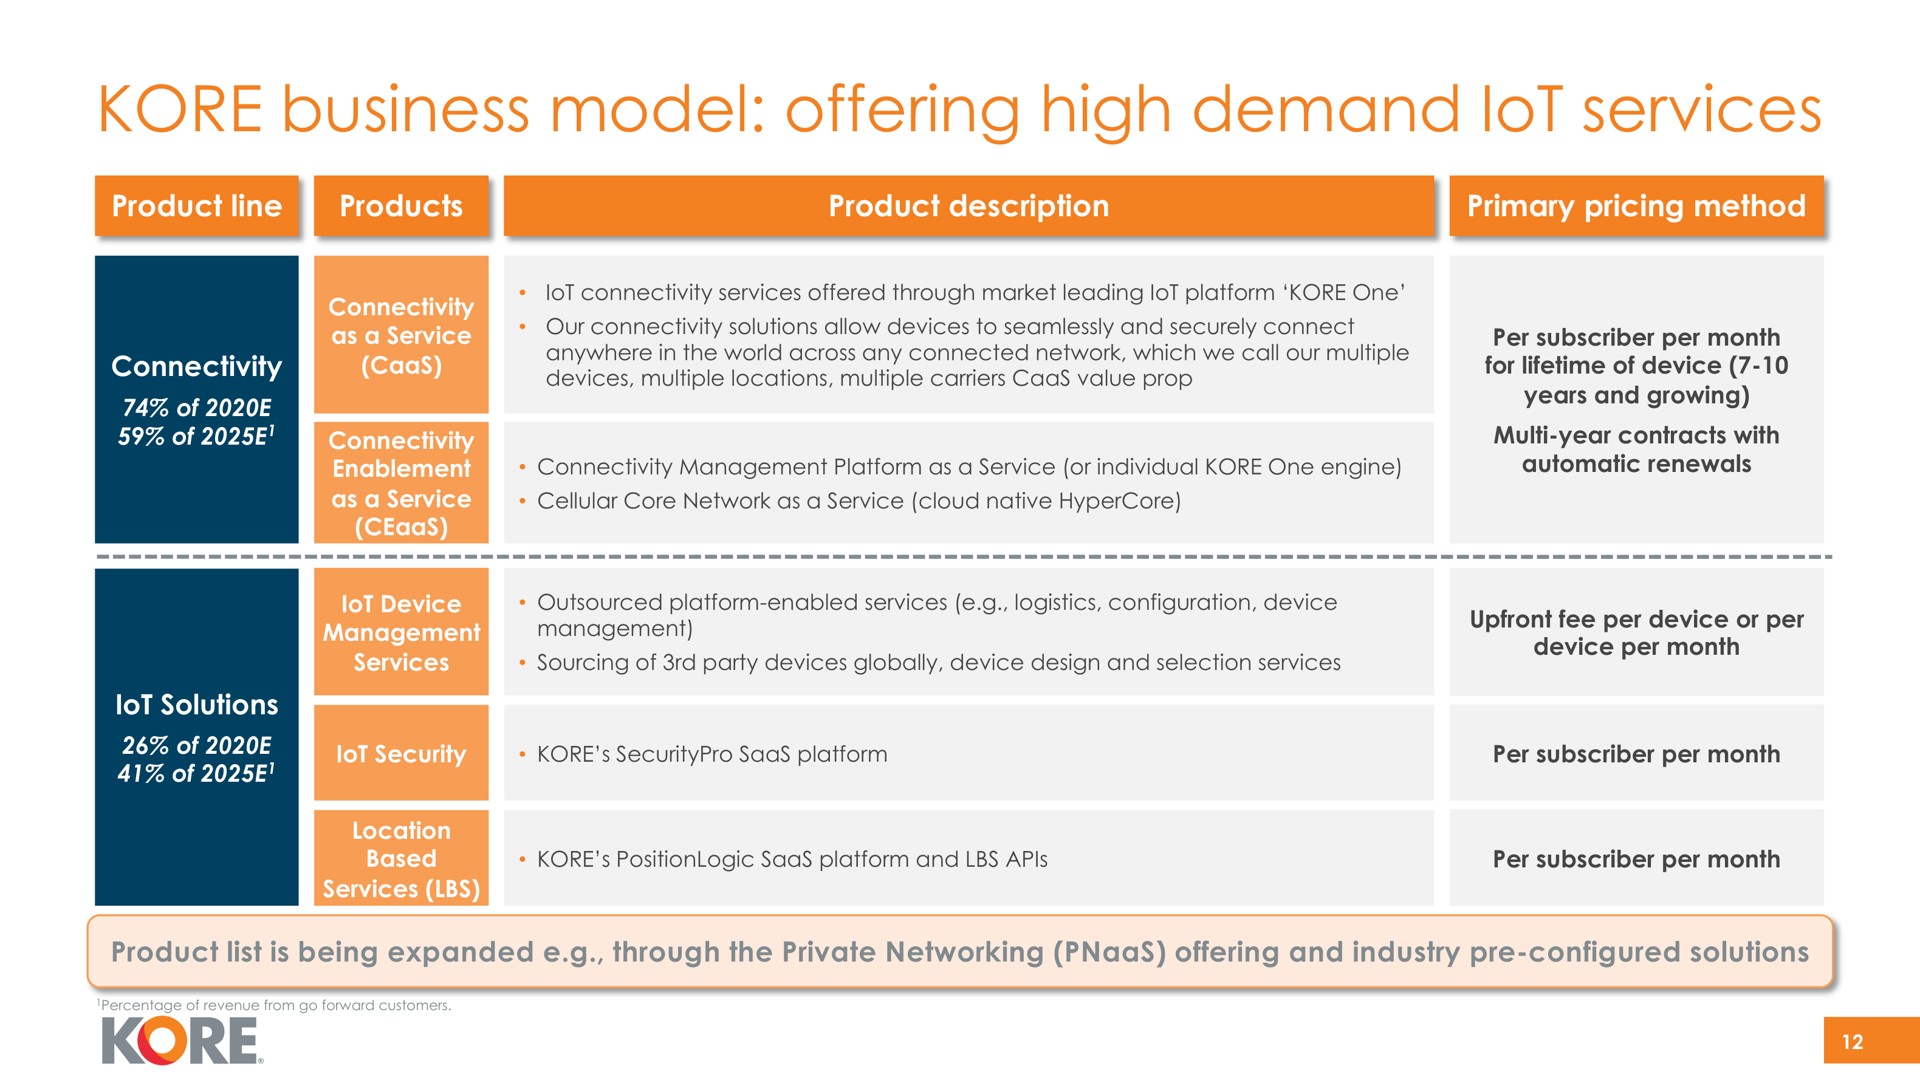 kore business model offering high demand services | Kore